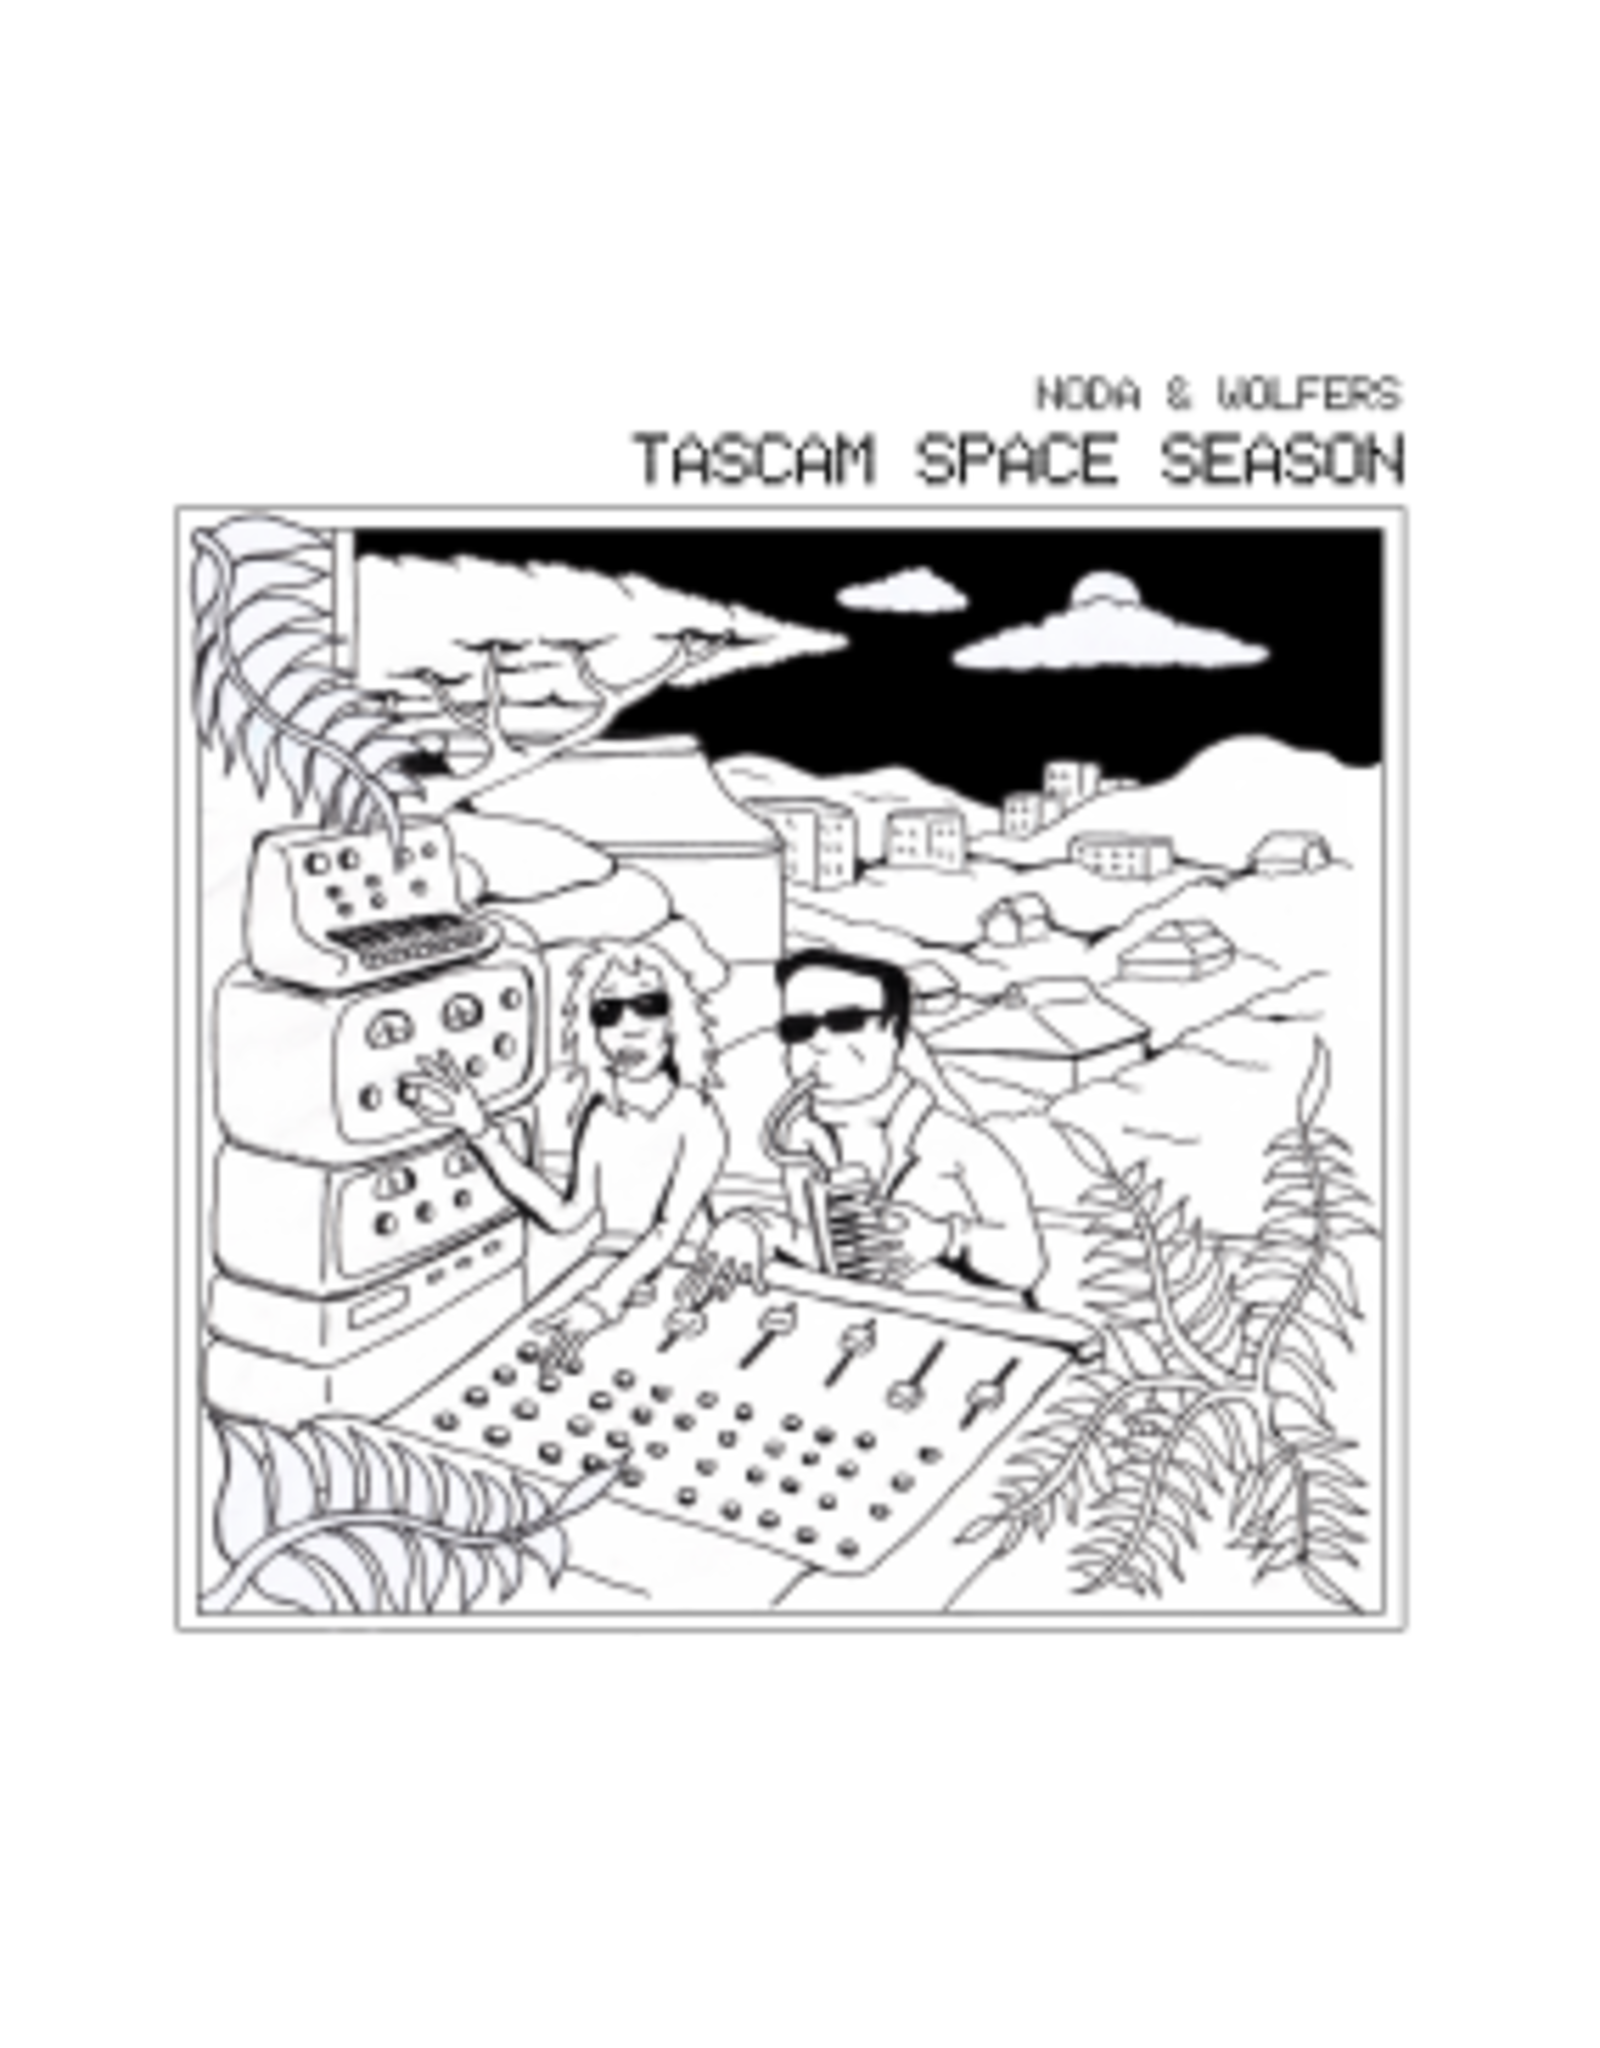 L.I.E.S. Noda & Wolfers: Tascam Space Season LP